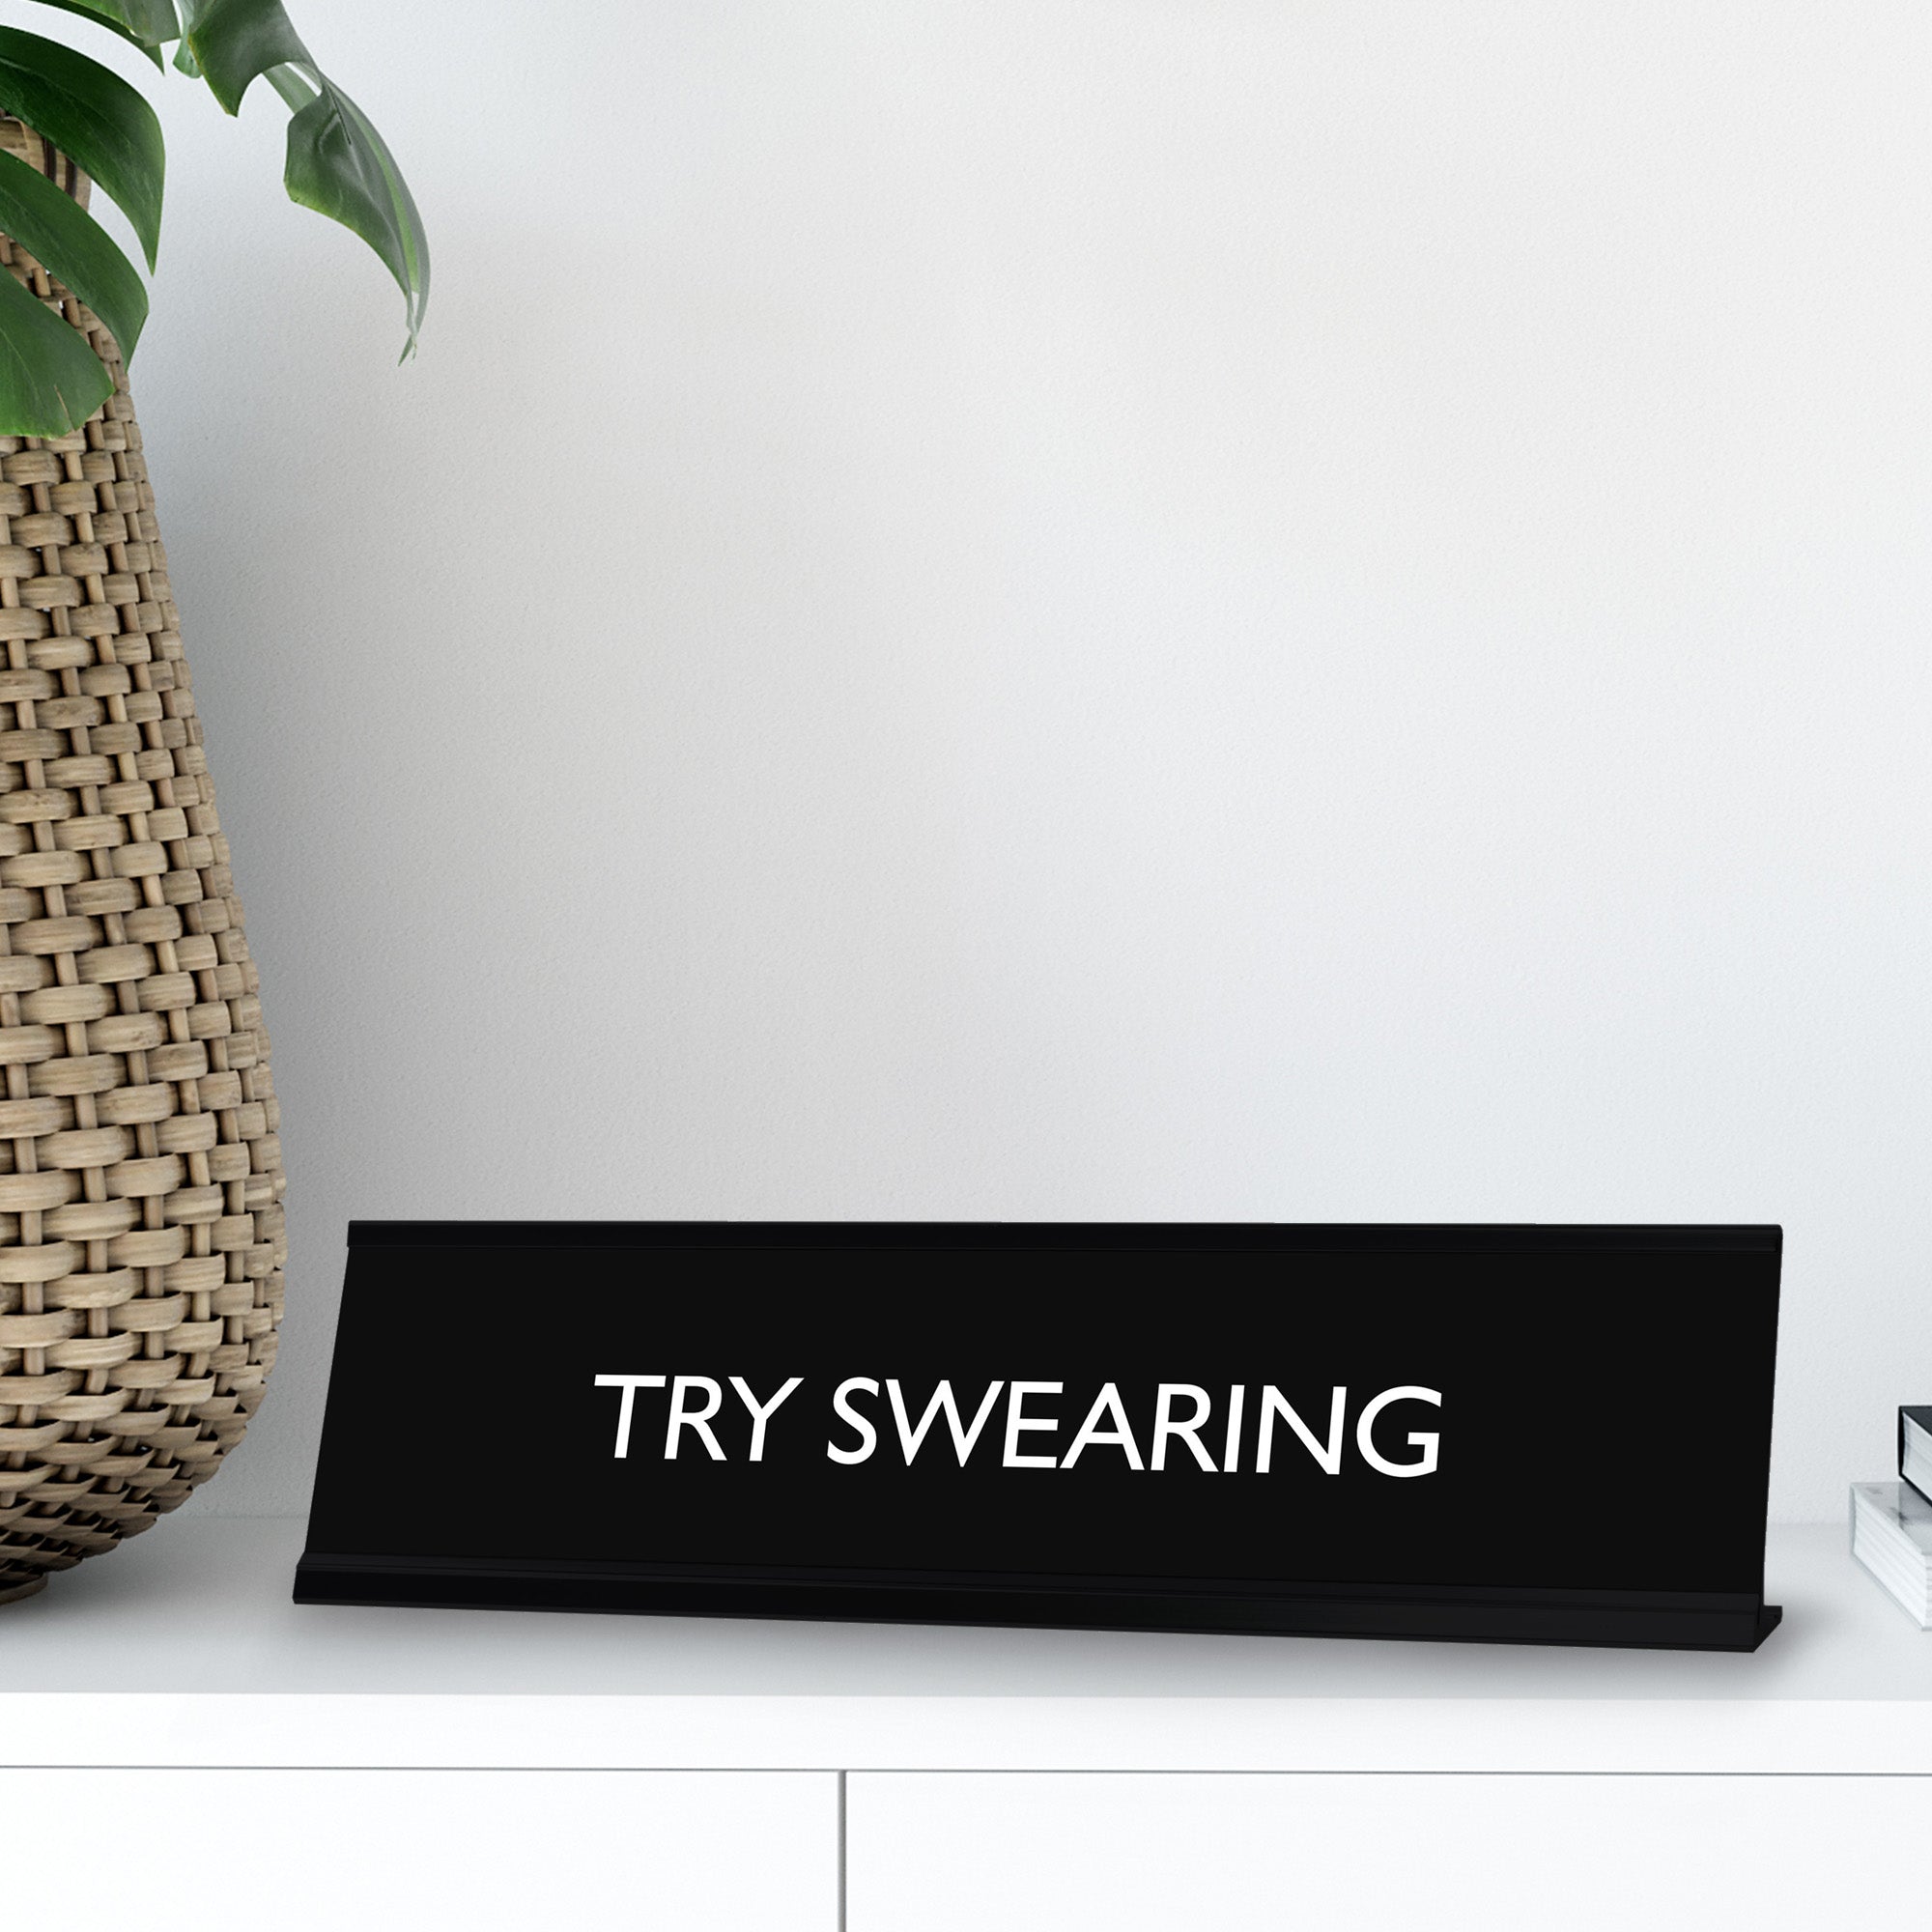 TRY SWEARING Novelty Desk Sign